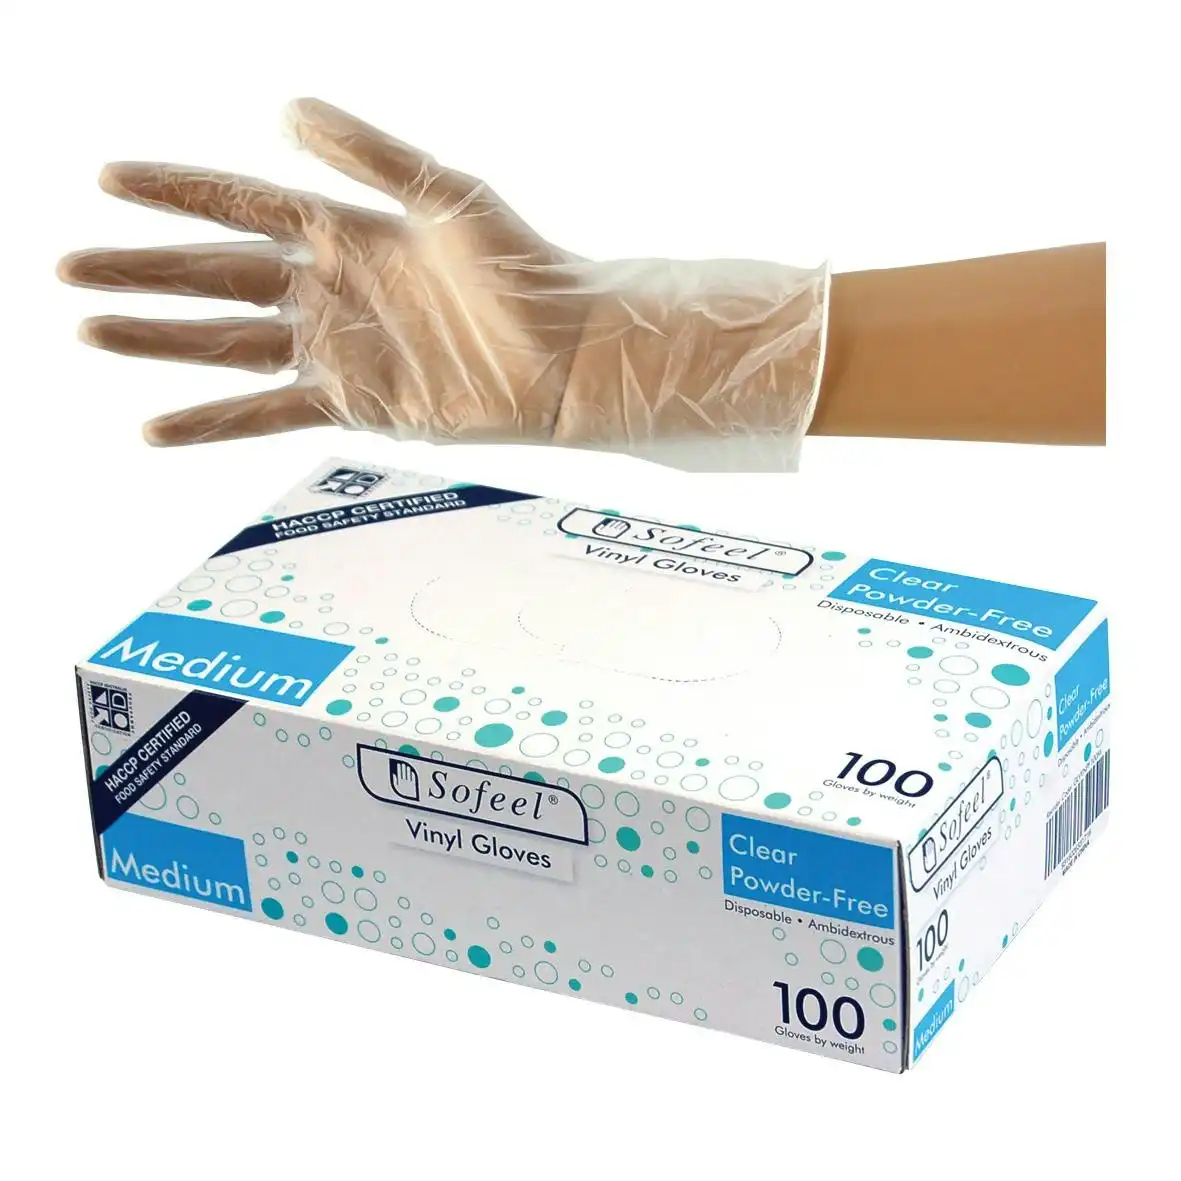 Sofeel Vinyl Gloves, Recyclable, 4.5g, Powder Free, Medium, Clear, HACCP Grade, 100/Box, 1000/Carton